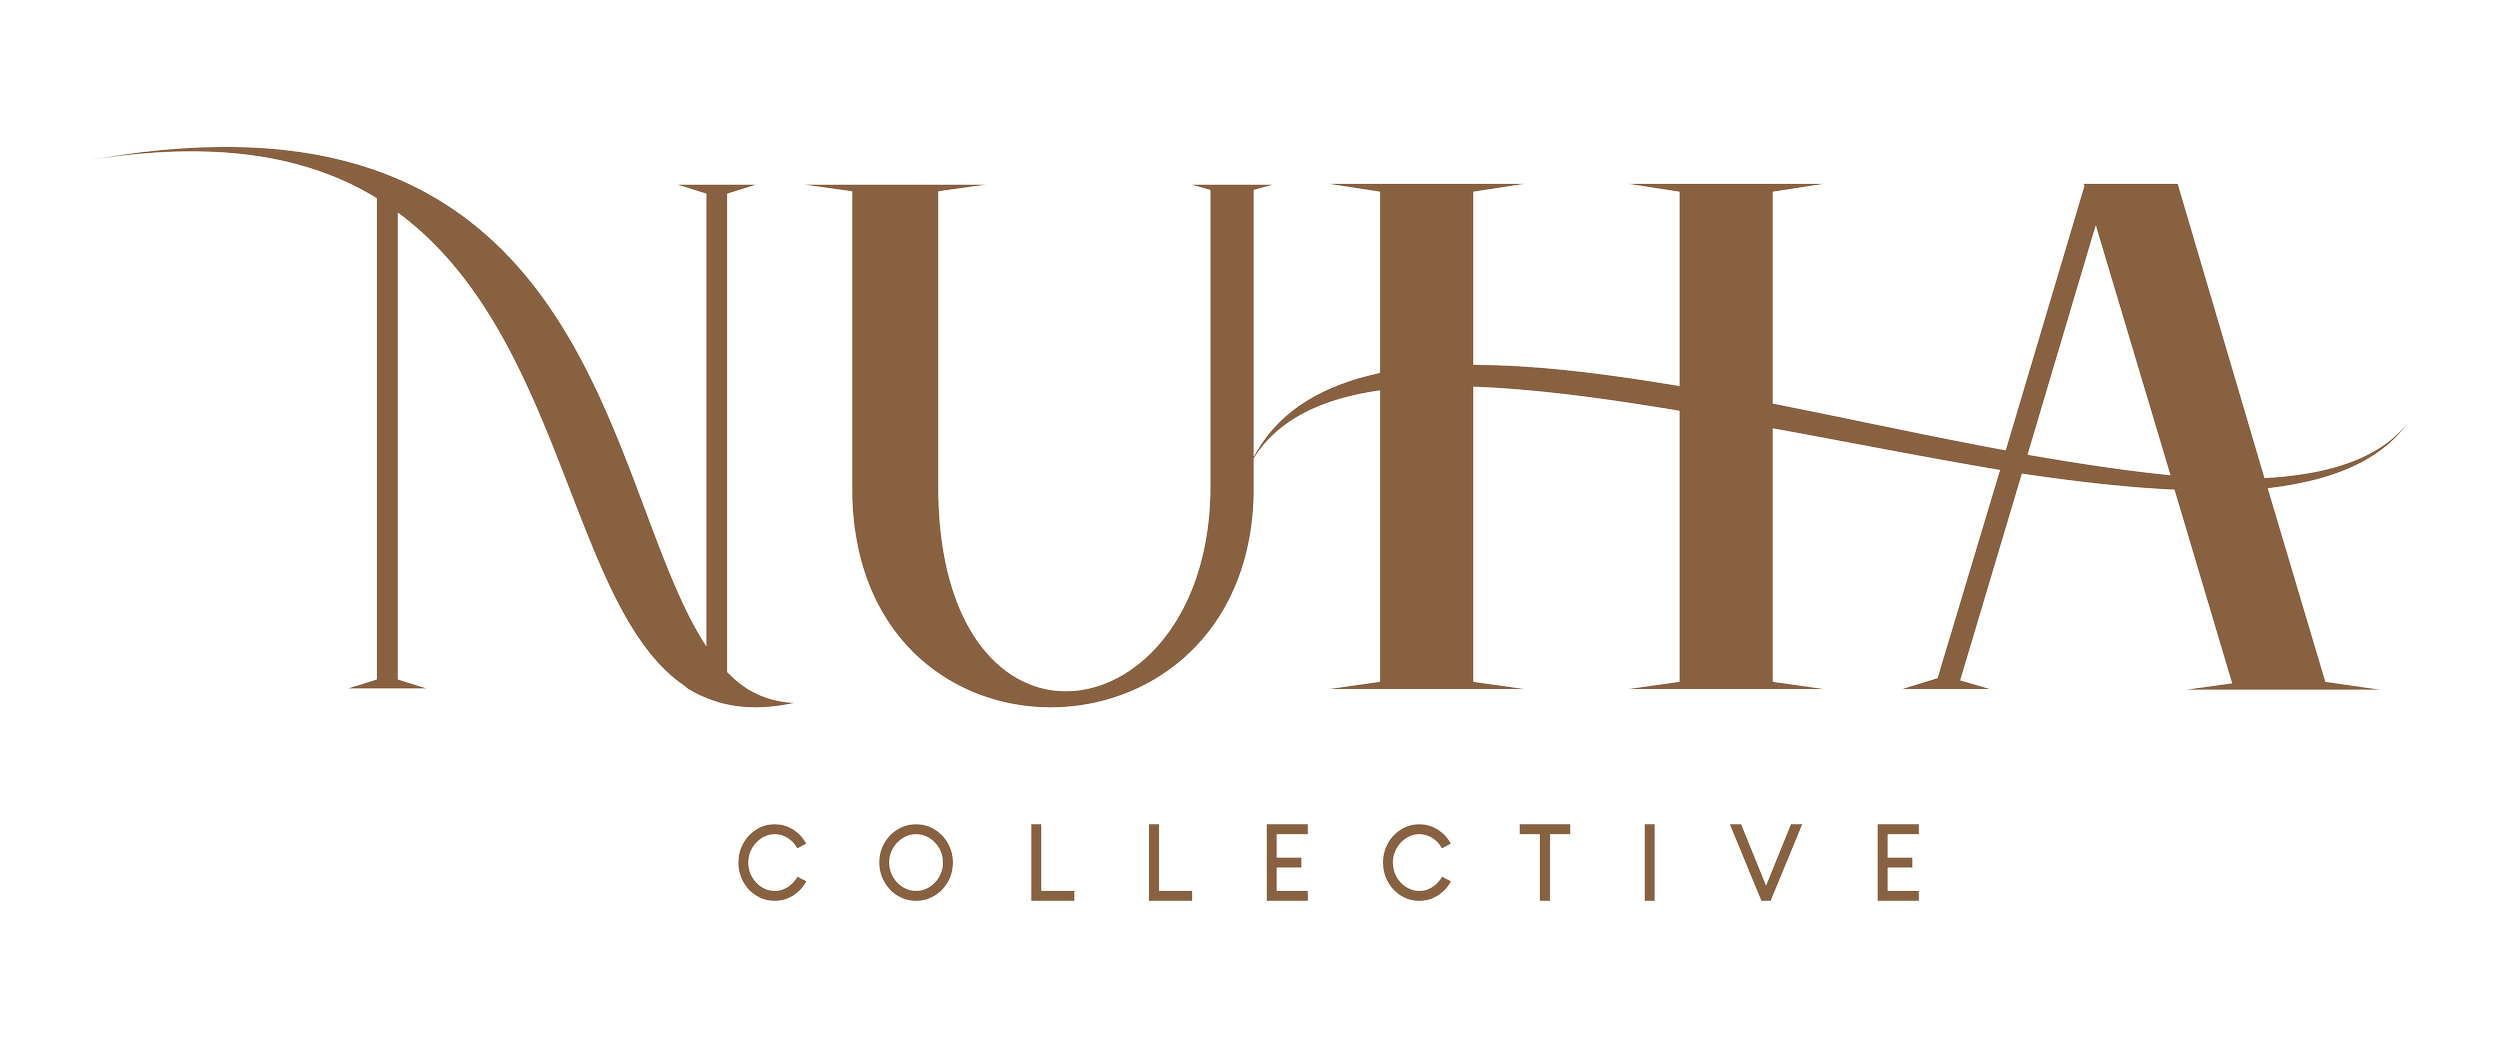 NUHA Collective